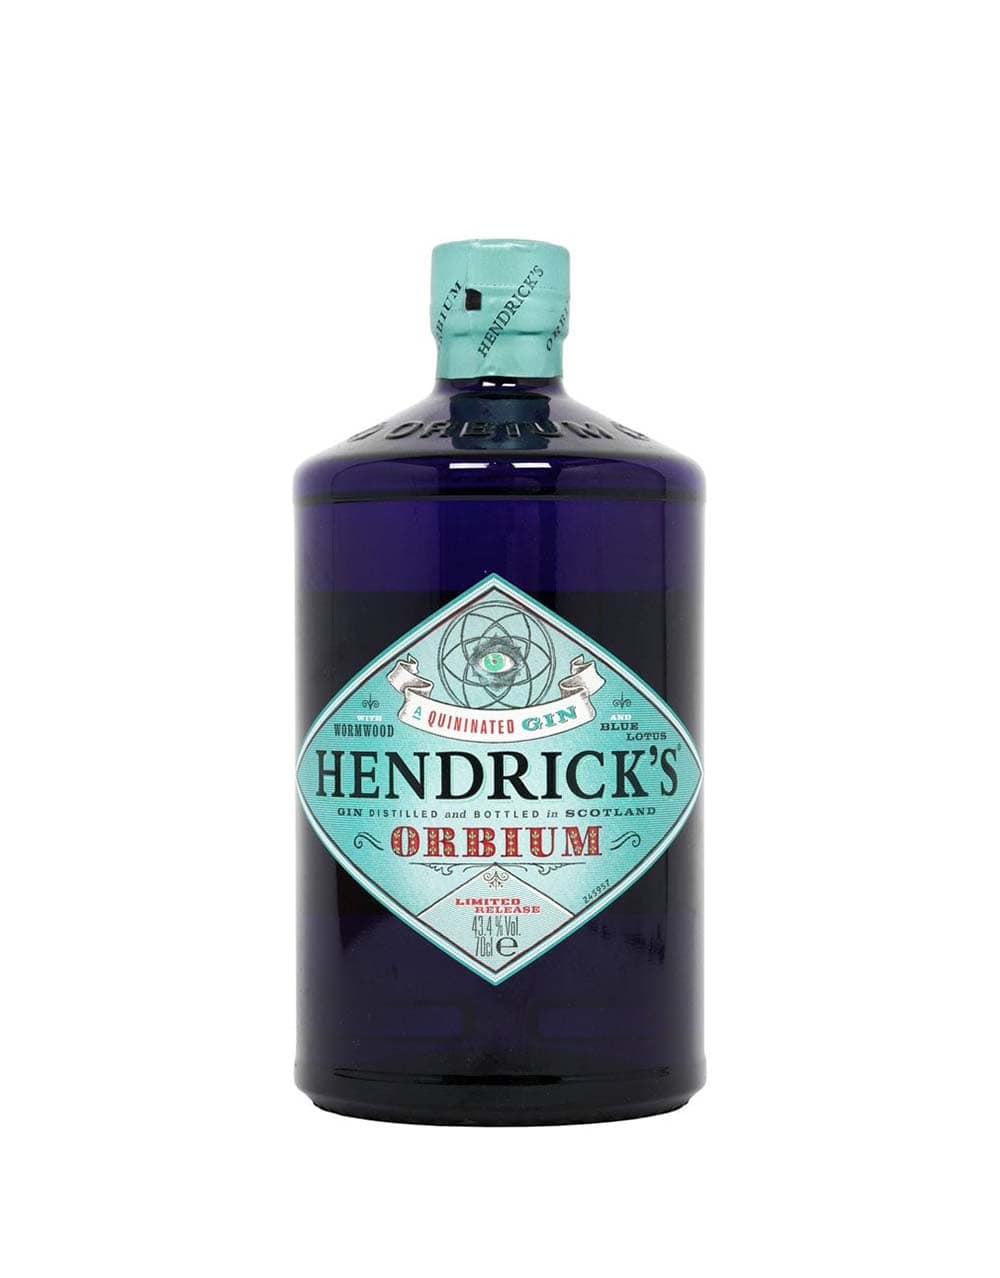 Hendrick's Orbium Gin: Experience the Taste!